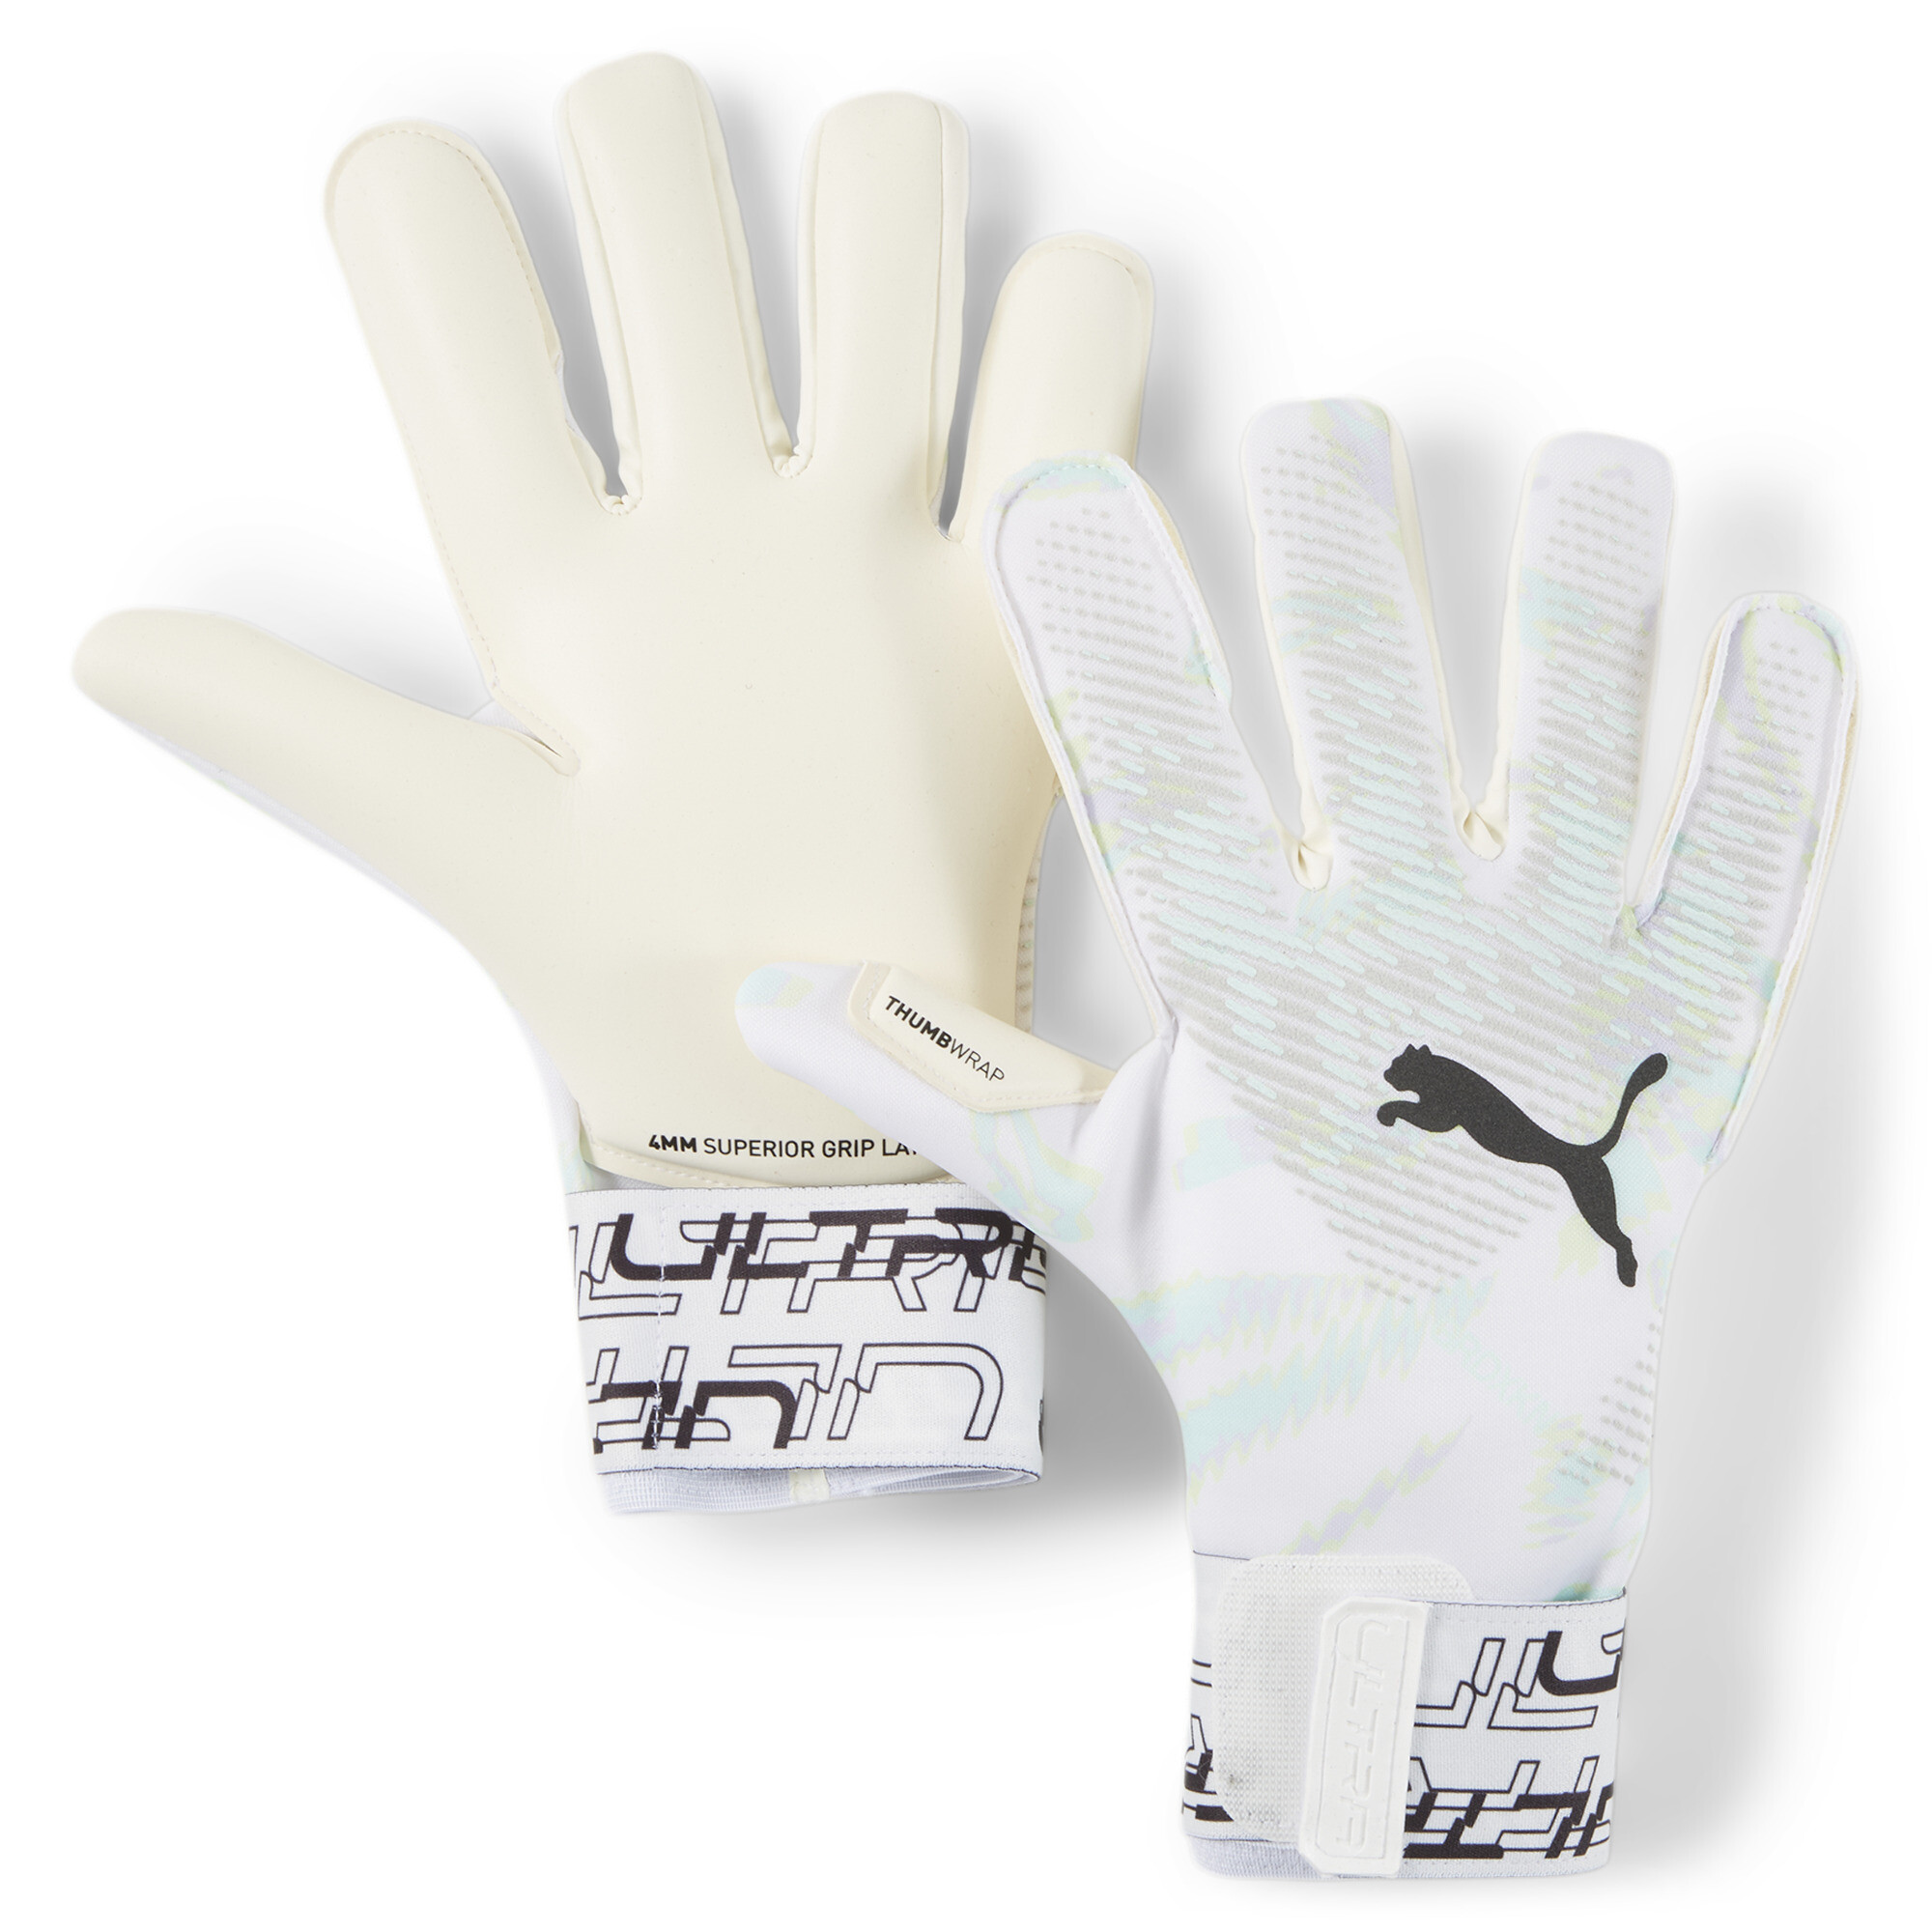 Men's Puma ULTRA Grip 1 Brilliance Hybrid Football Goalkeeper Gloves, White, Size 9.5, Accessories